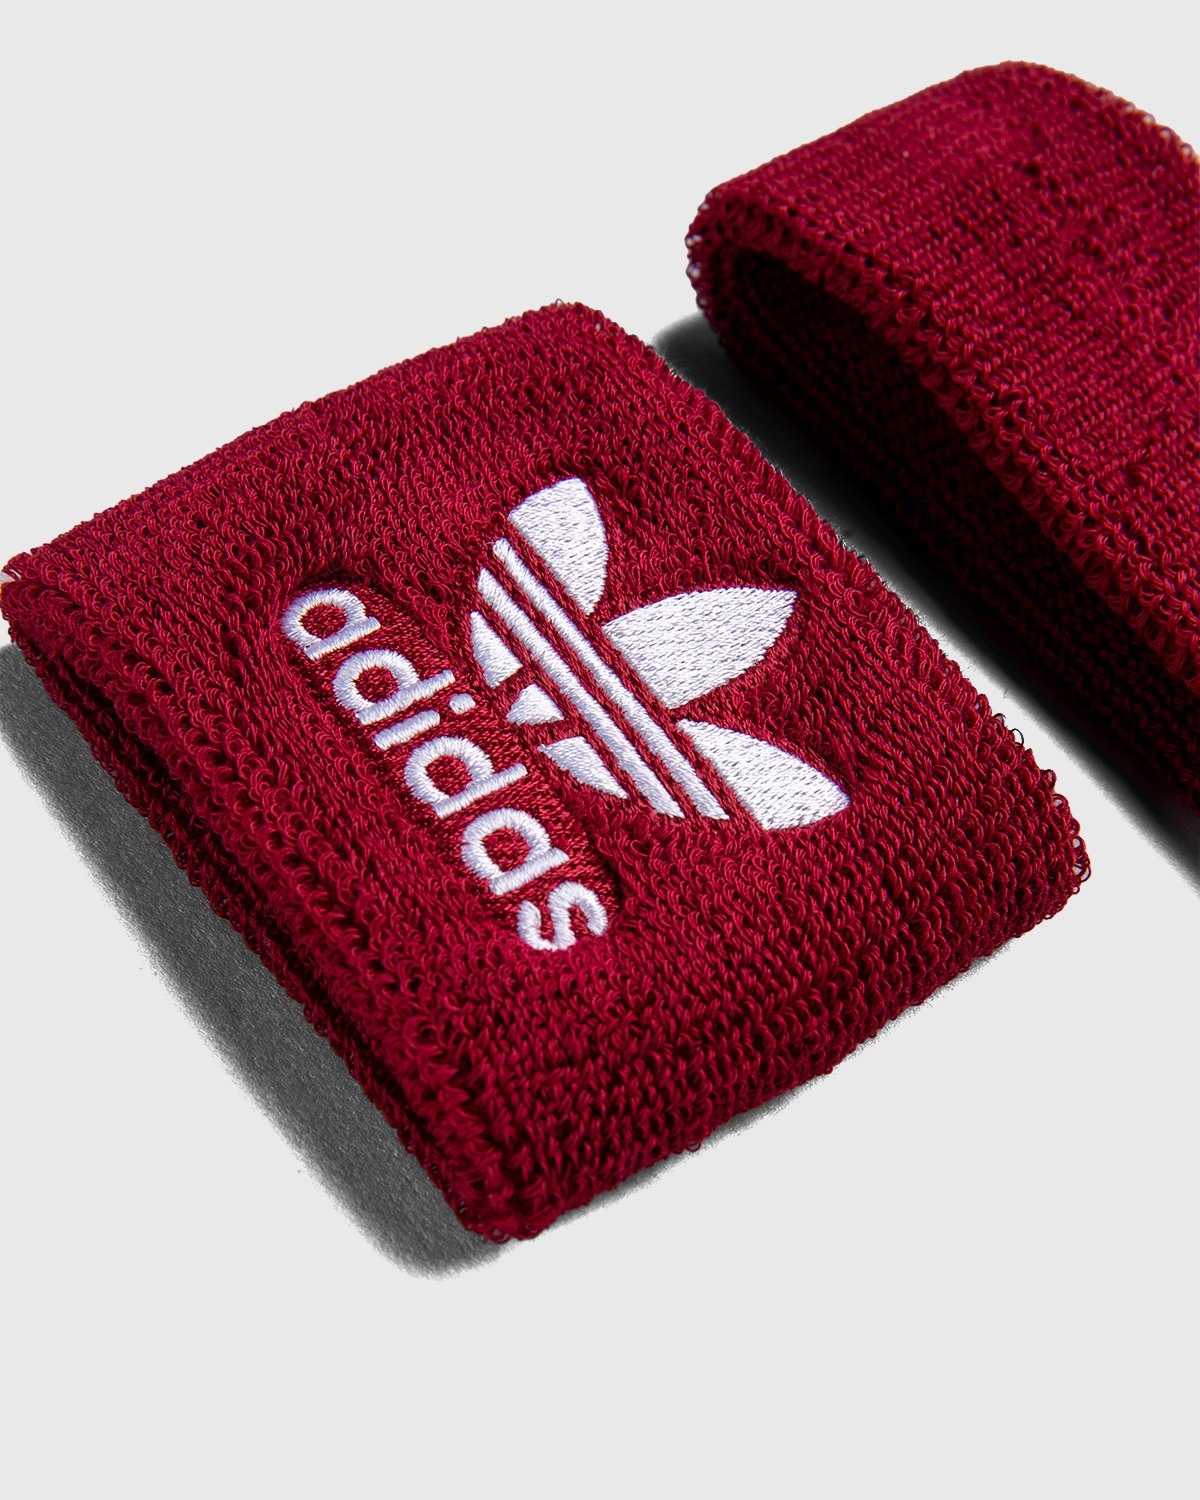 adidas Originals x Human Made – Bands Set Burgundy - Hats - Red - Image 3